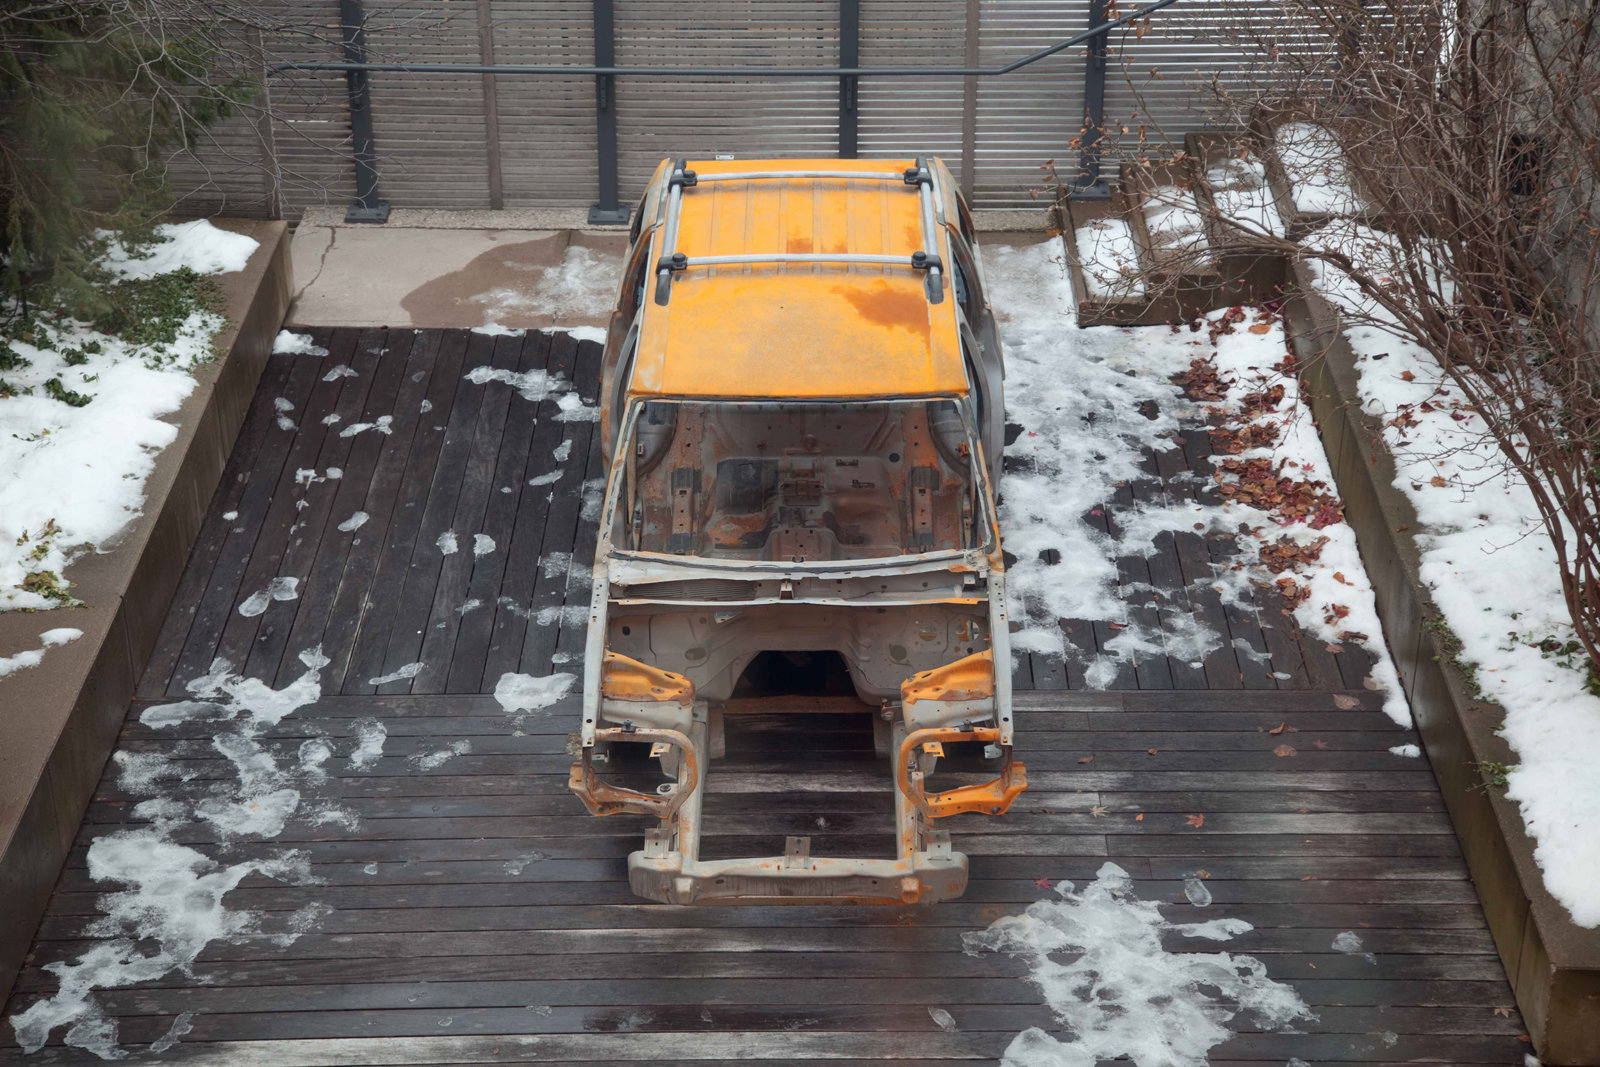 Duane Linklater, 2005 Grand Jeep Cherokee, 2013, steel frame of artist’s vehicle. dimensions variable